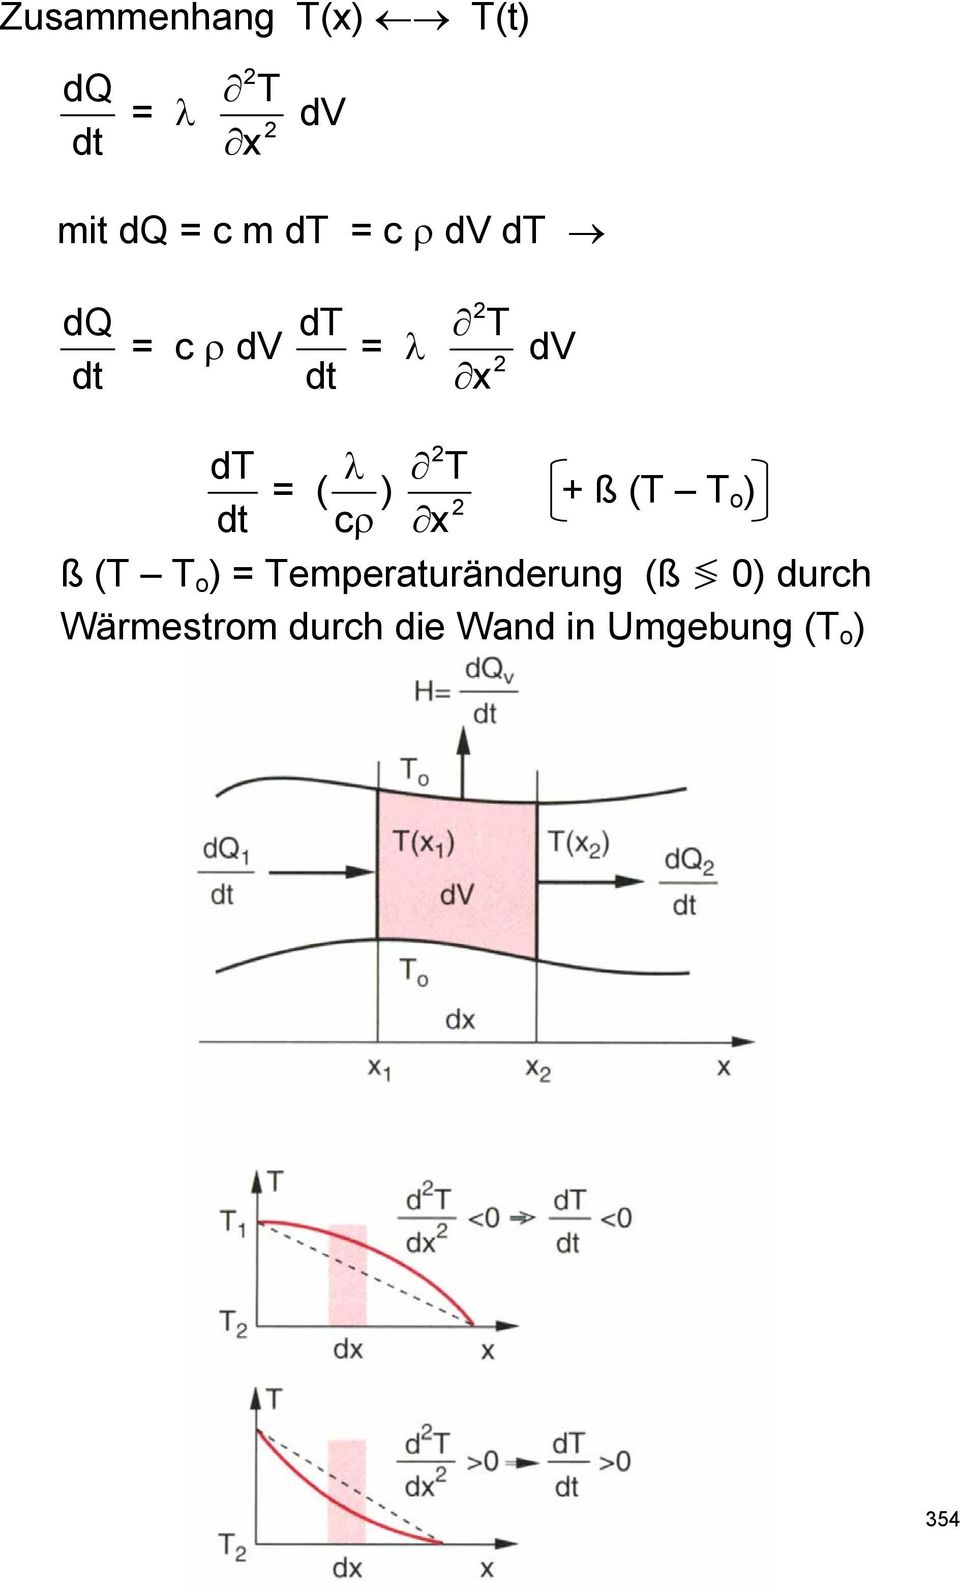 ß (T T o ) ß (T T o ) = Temperaturänderung (ß 0)